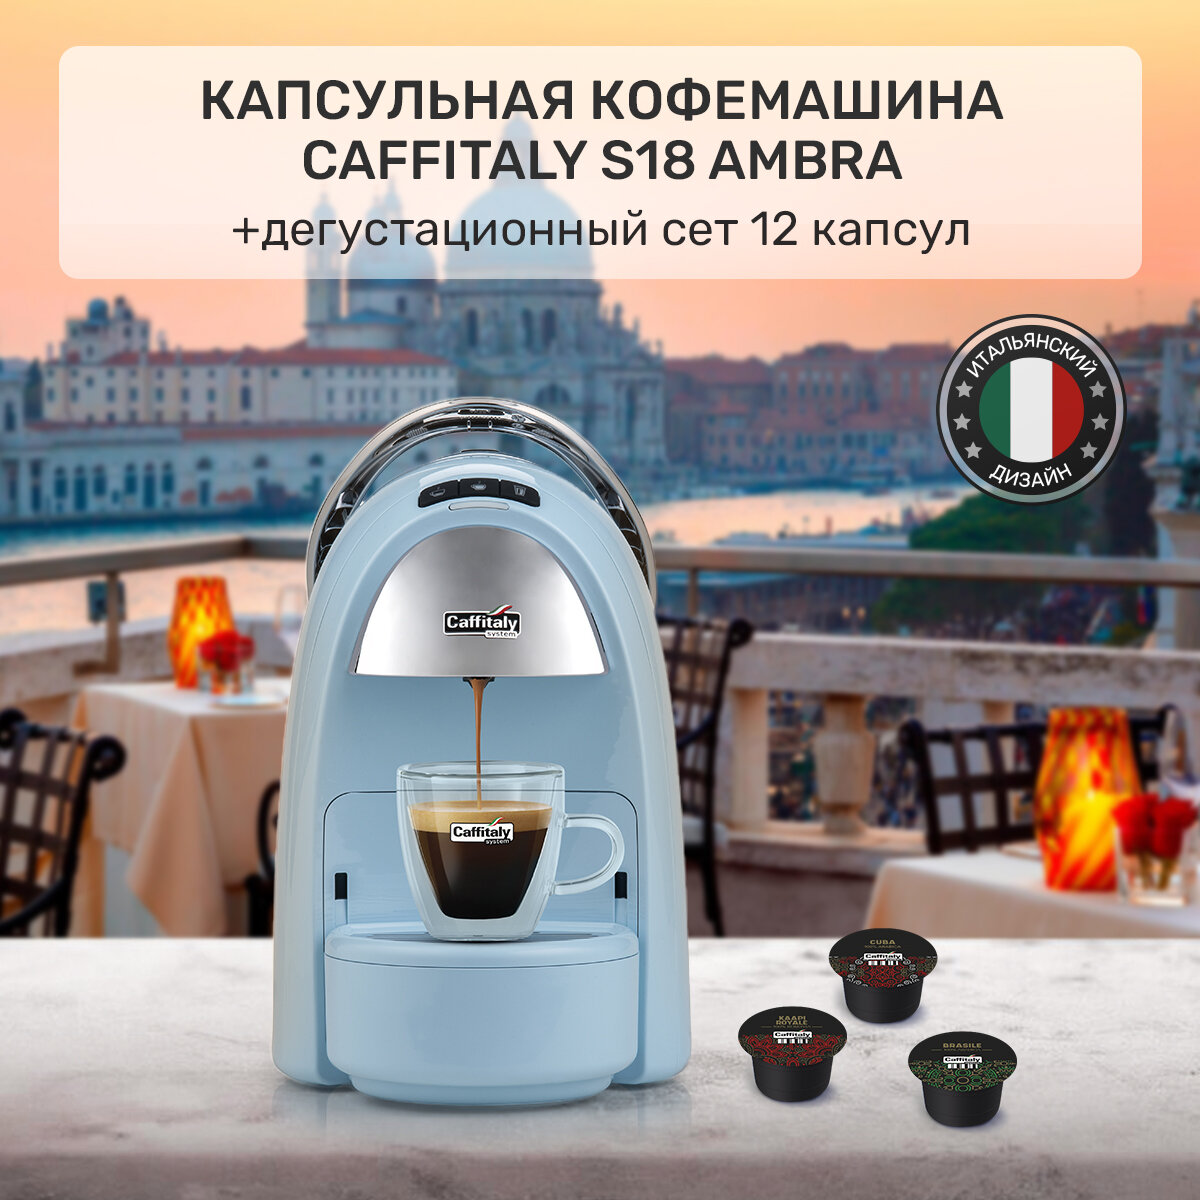 Набор Кофемашина капсульная Ambra S18, голубая и 12 капсул кофе